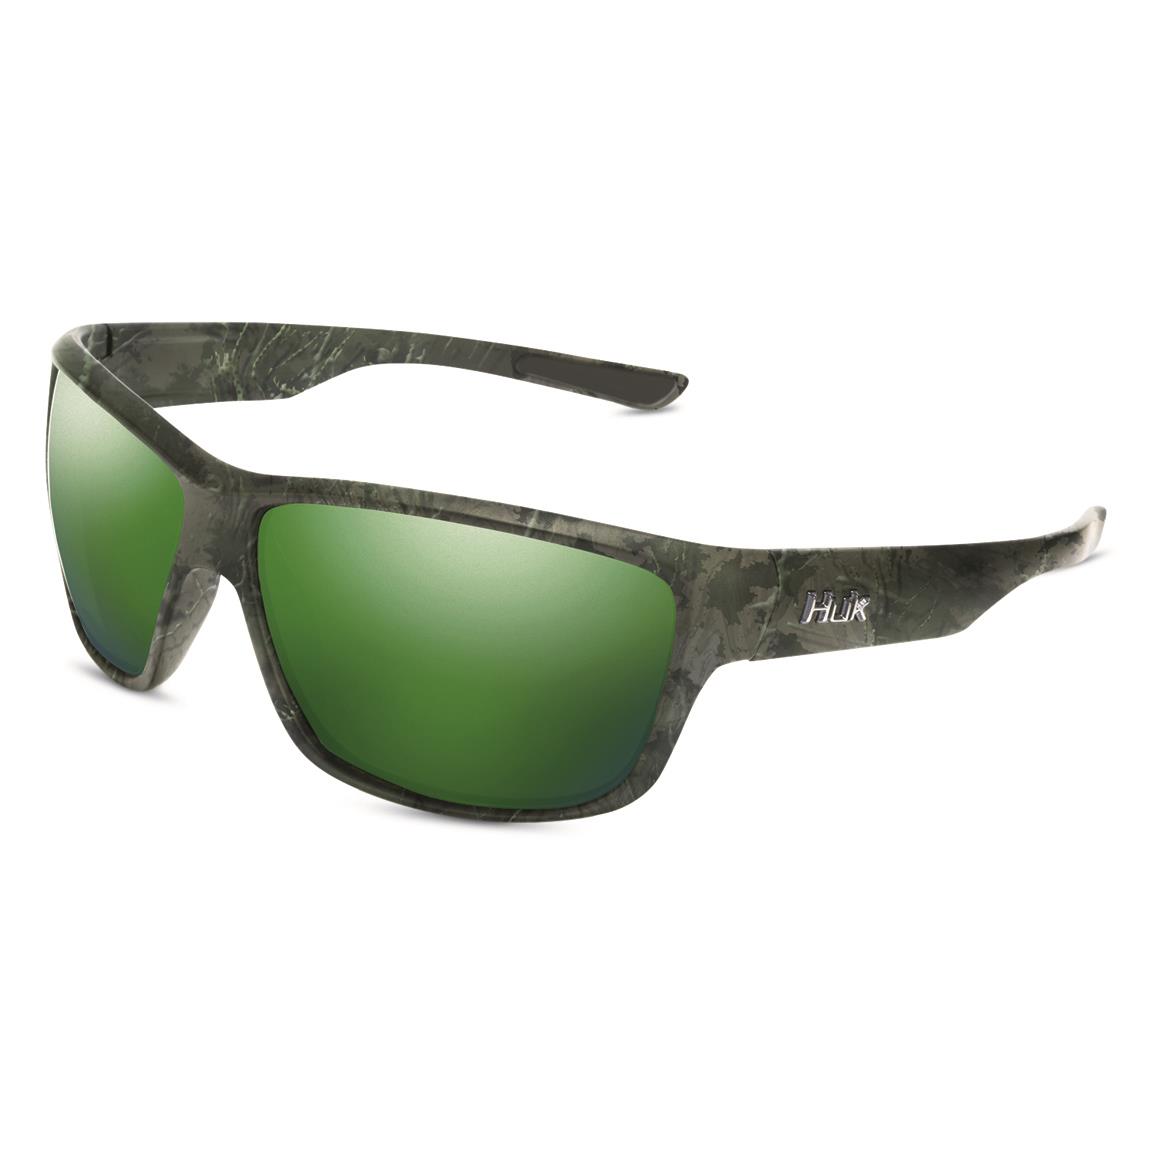 Huk Men's Spar Polarized Sunglasses, Subphantis/smoke/green Mirror